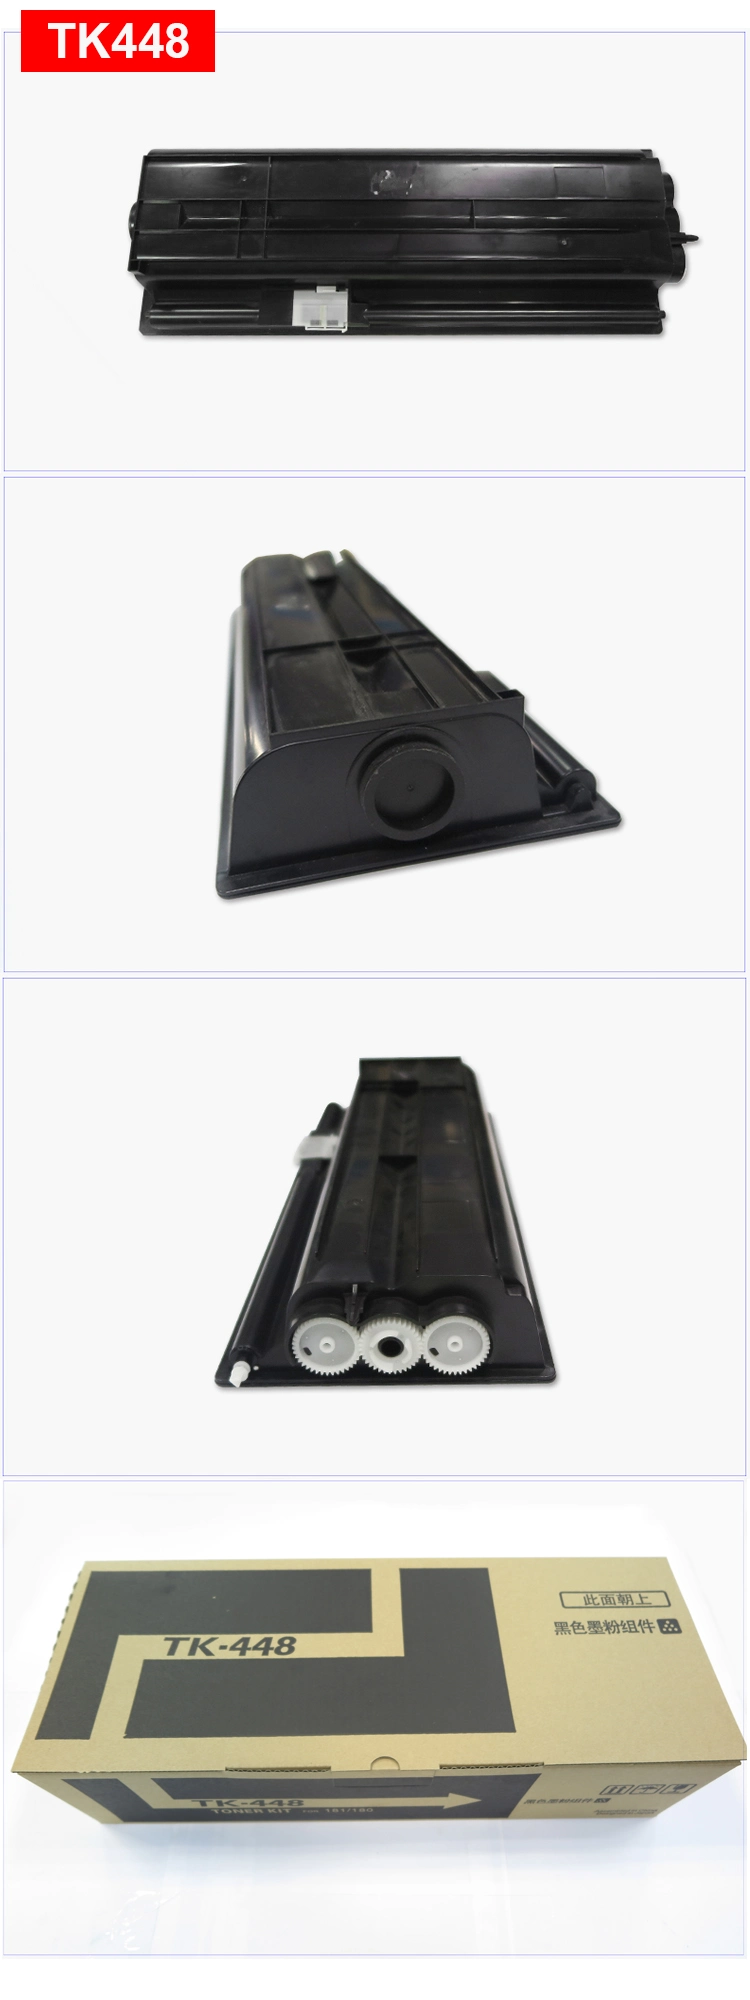 Compatible Copier Toner Cartridge Kyocera Tk448 for Use in Kyocera Fs6970 Copier Machine